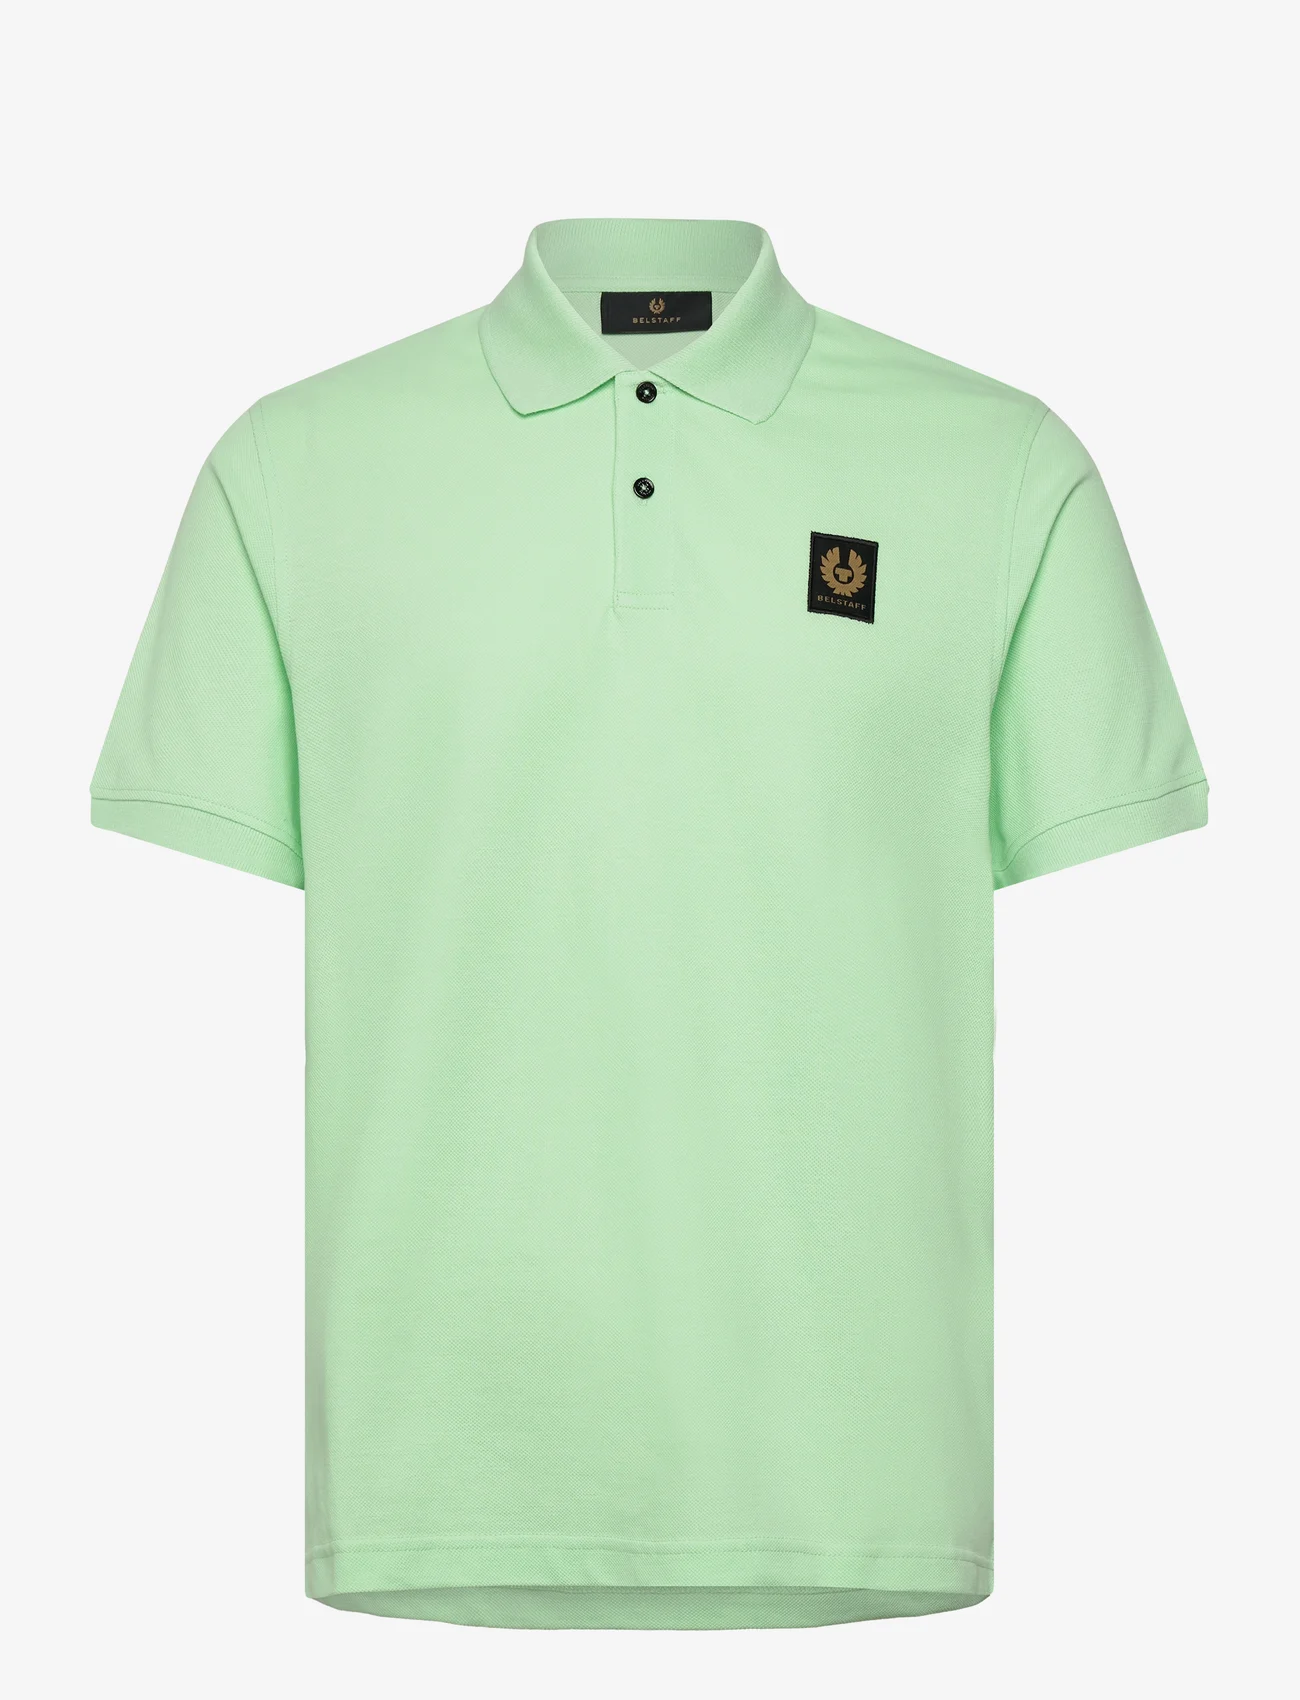 Belstaff - BELSTAFF POLO - basic shirts - new leaf green - 0